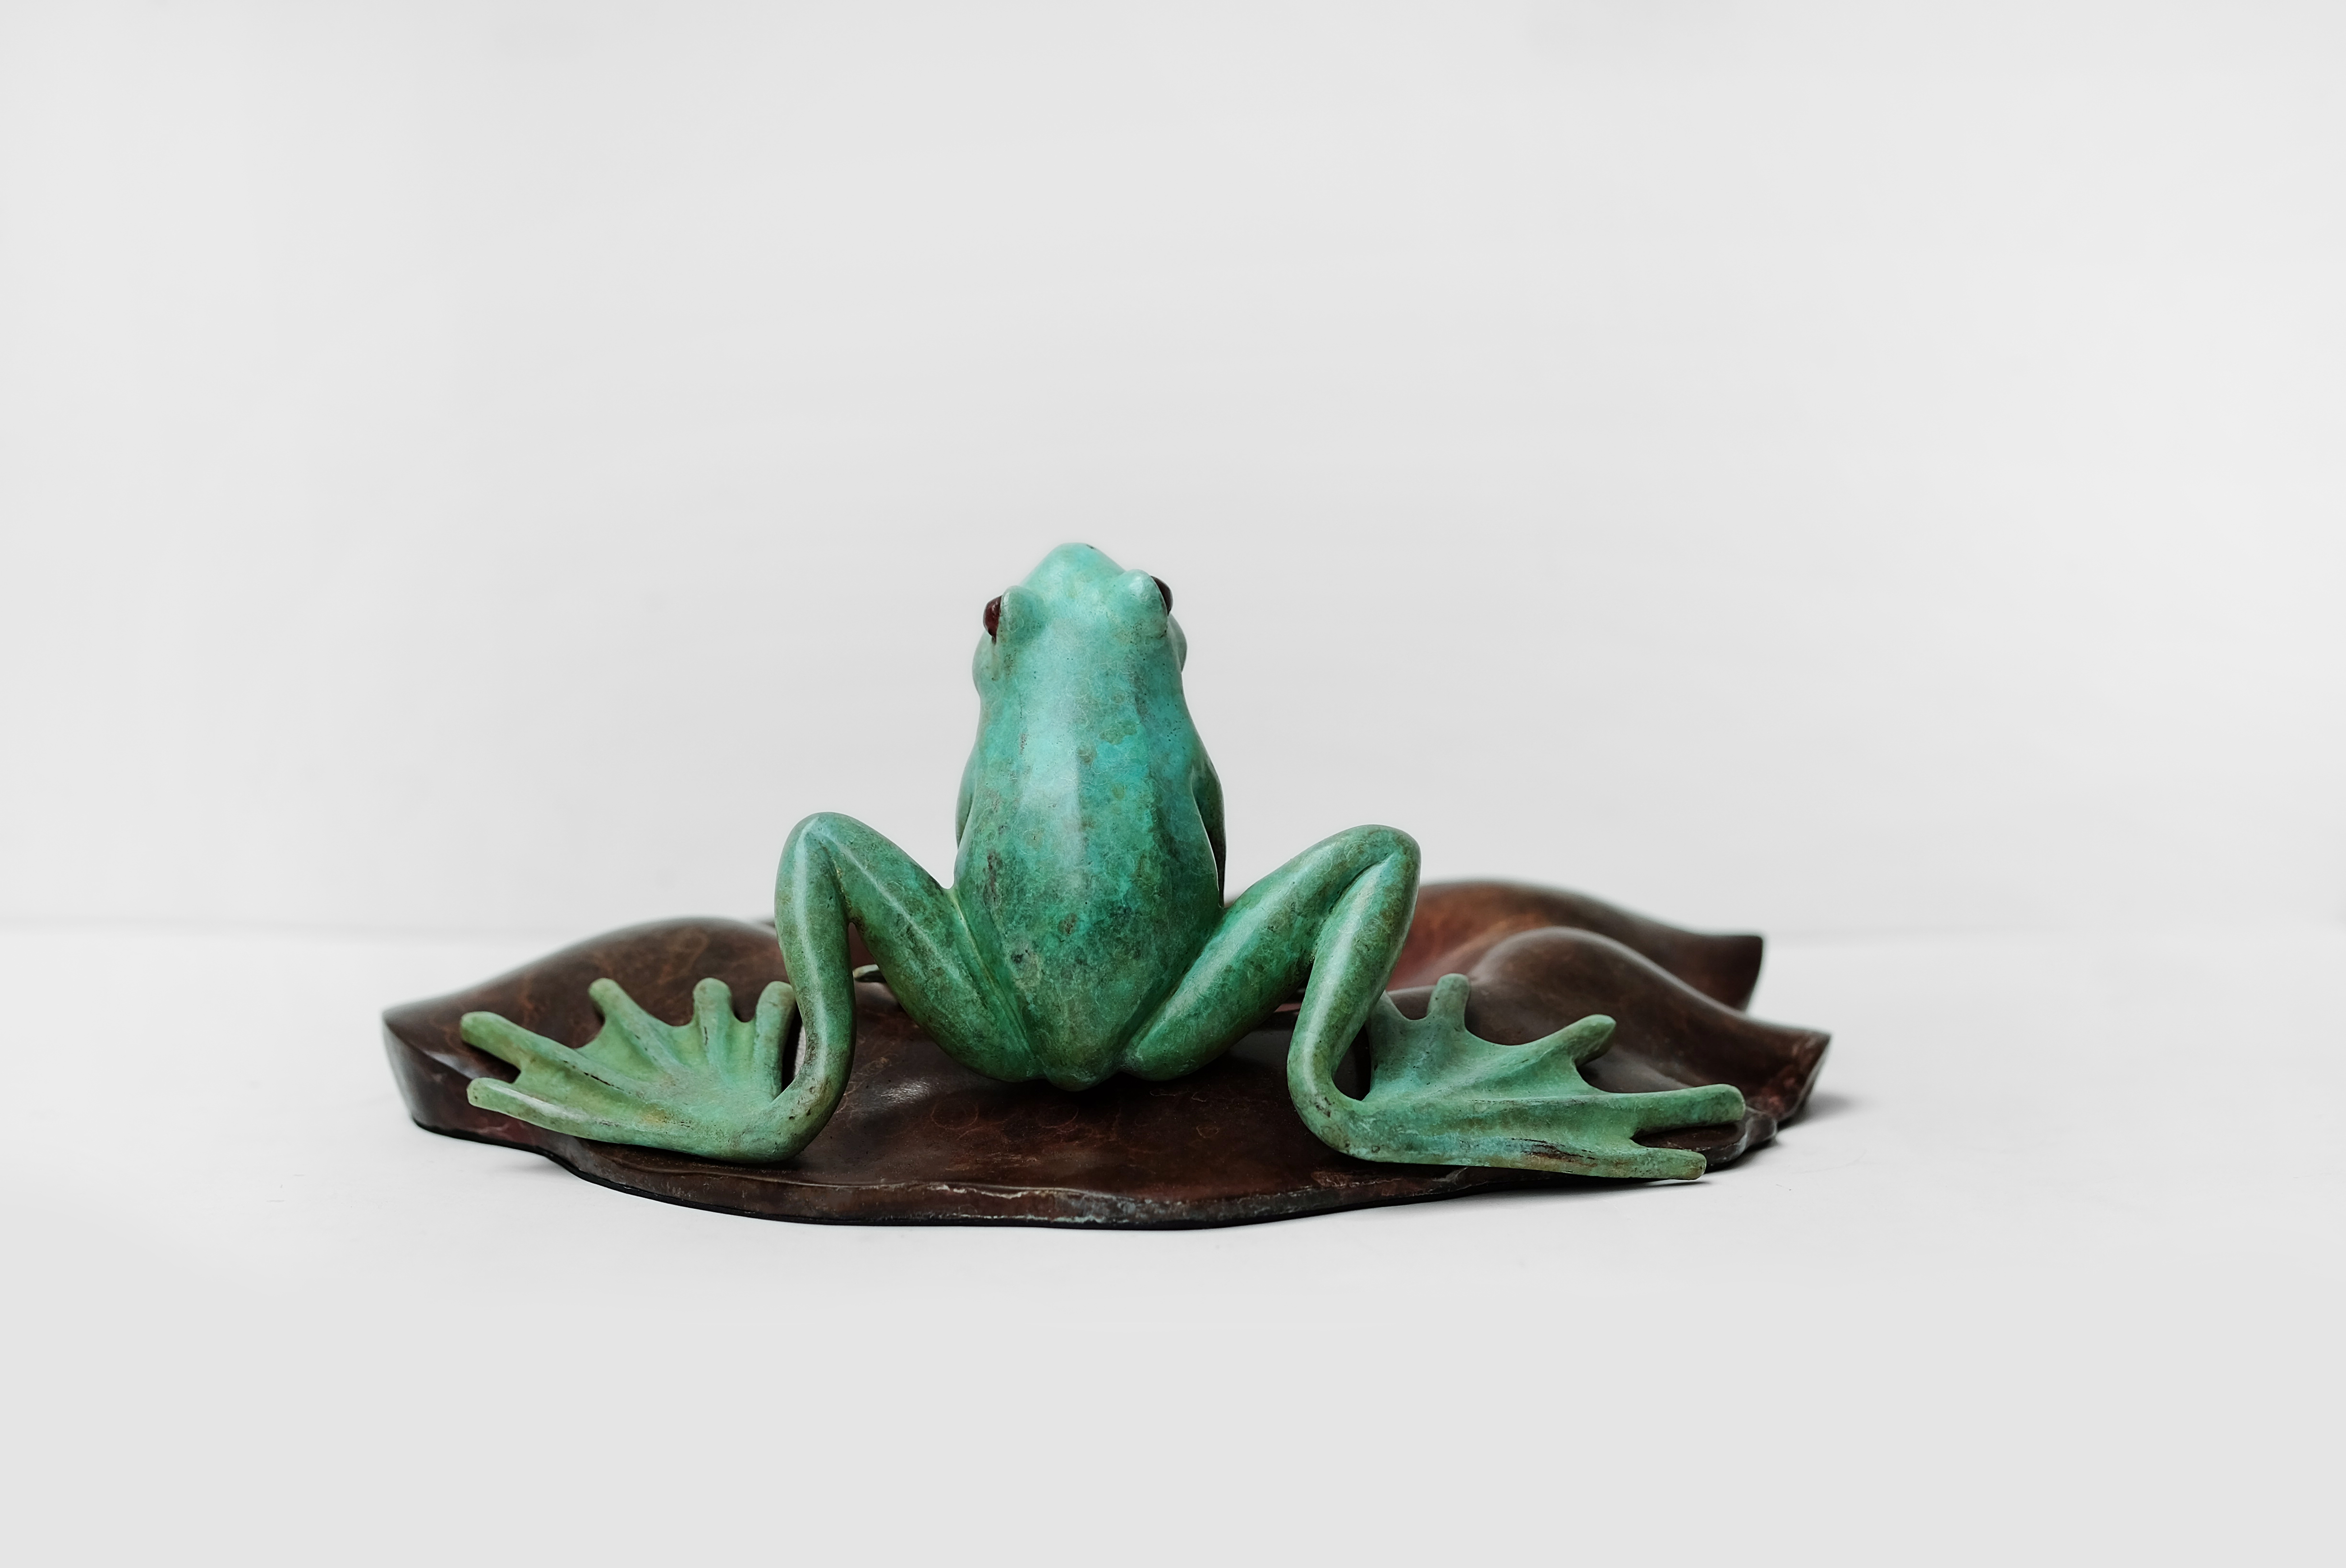 Frog Copper Art Installation 4896x3272